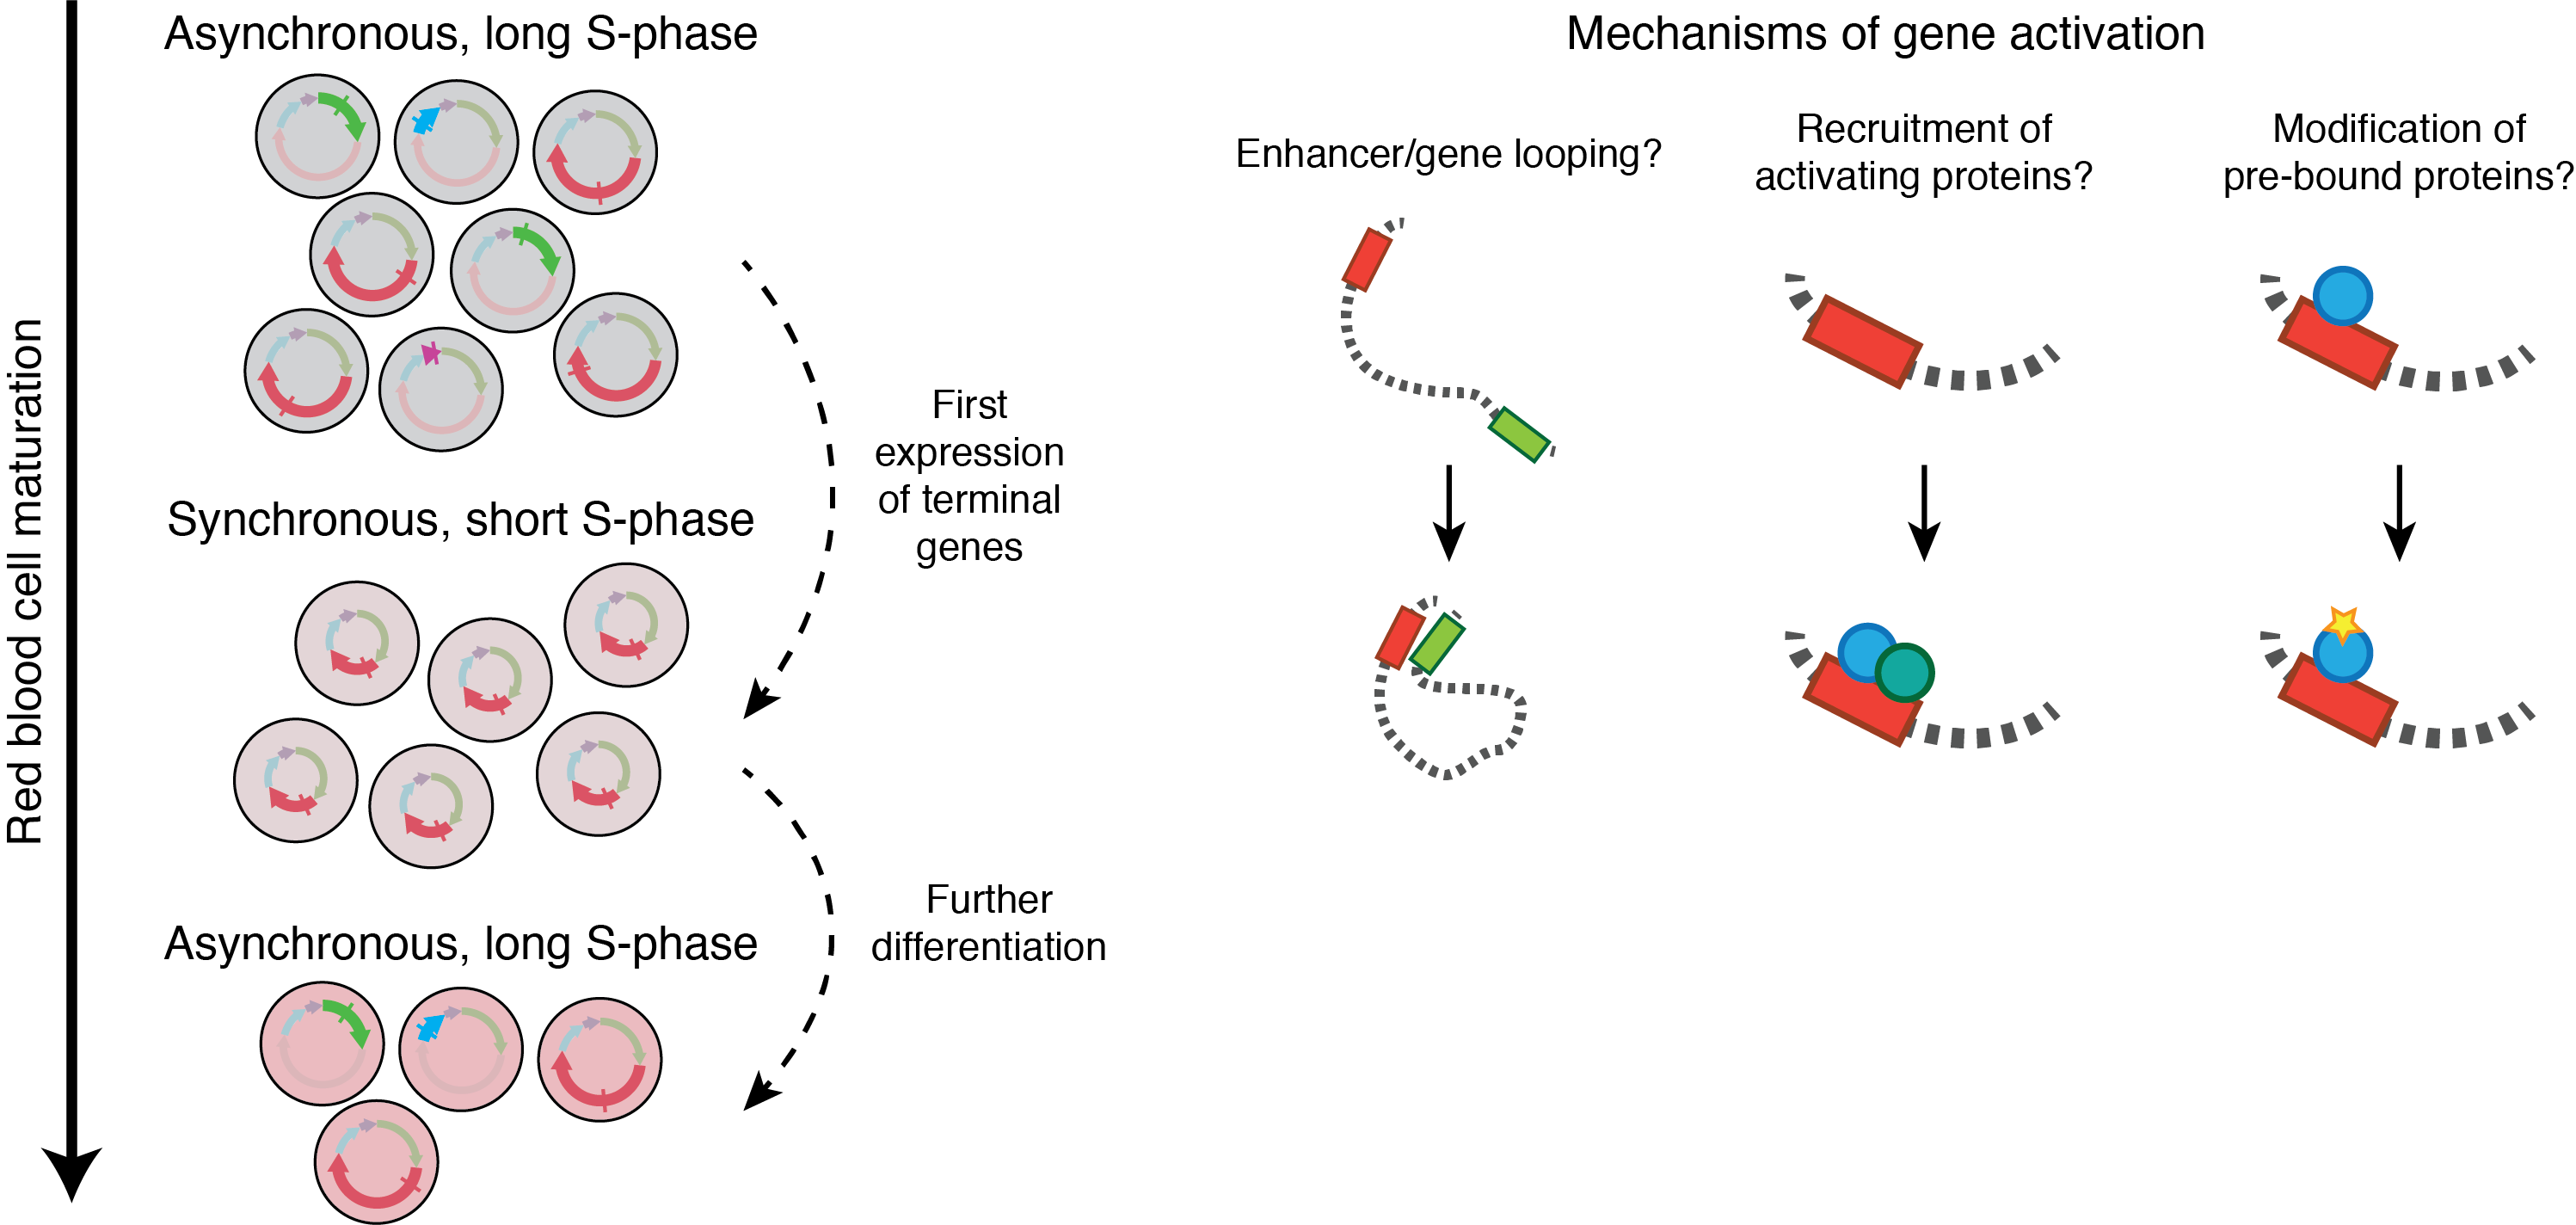 Mechanisms of gene activation in erythropoiesis